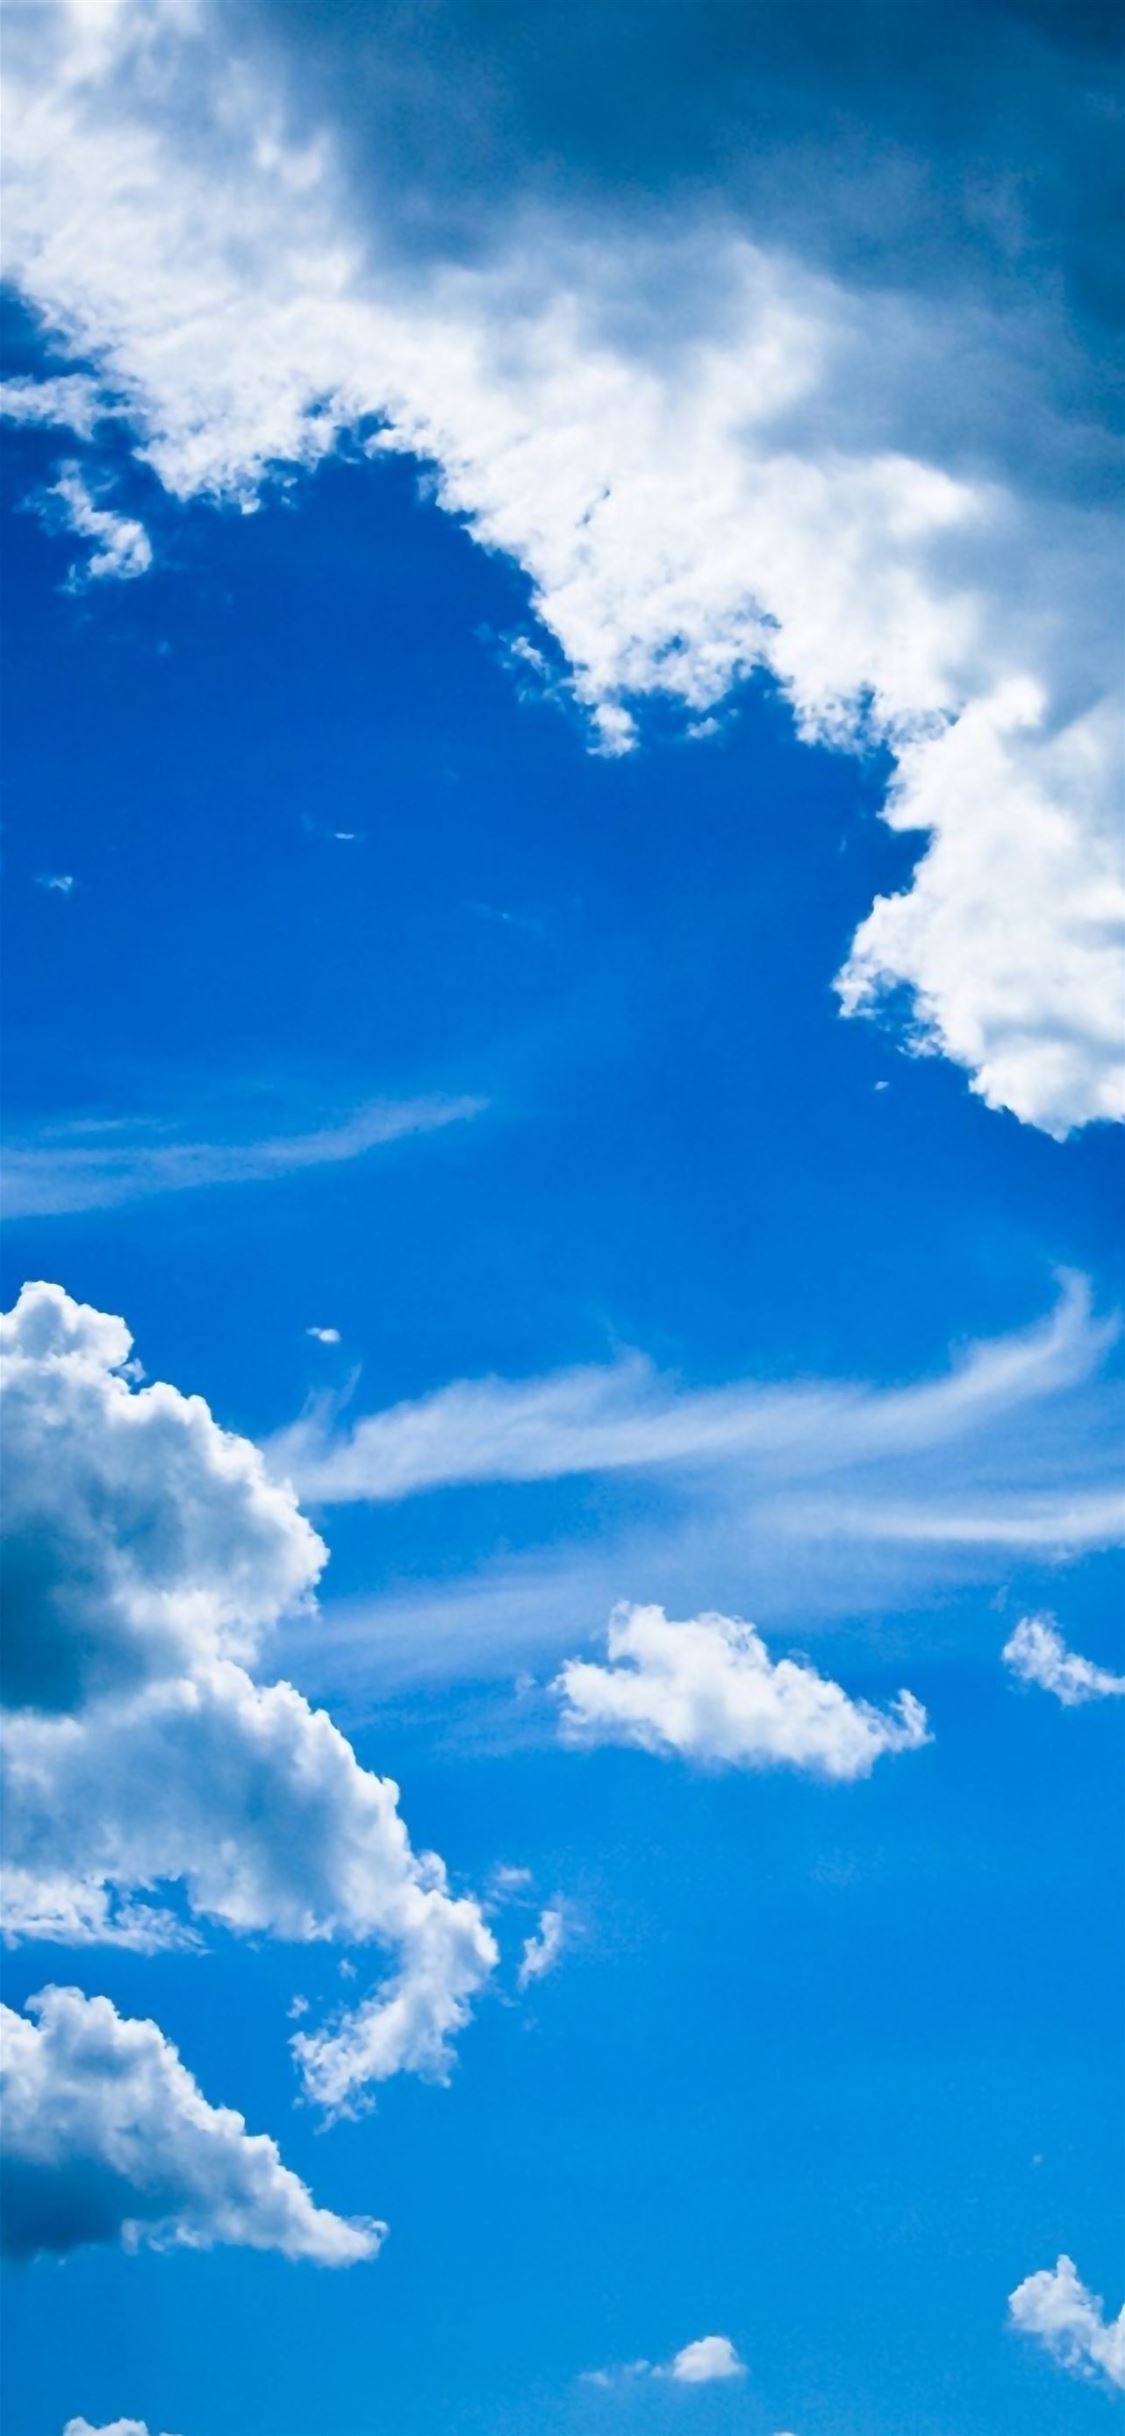 Blue clouds iPhone wallpaper 